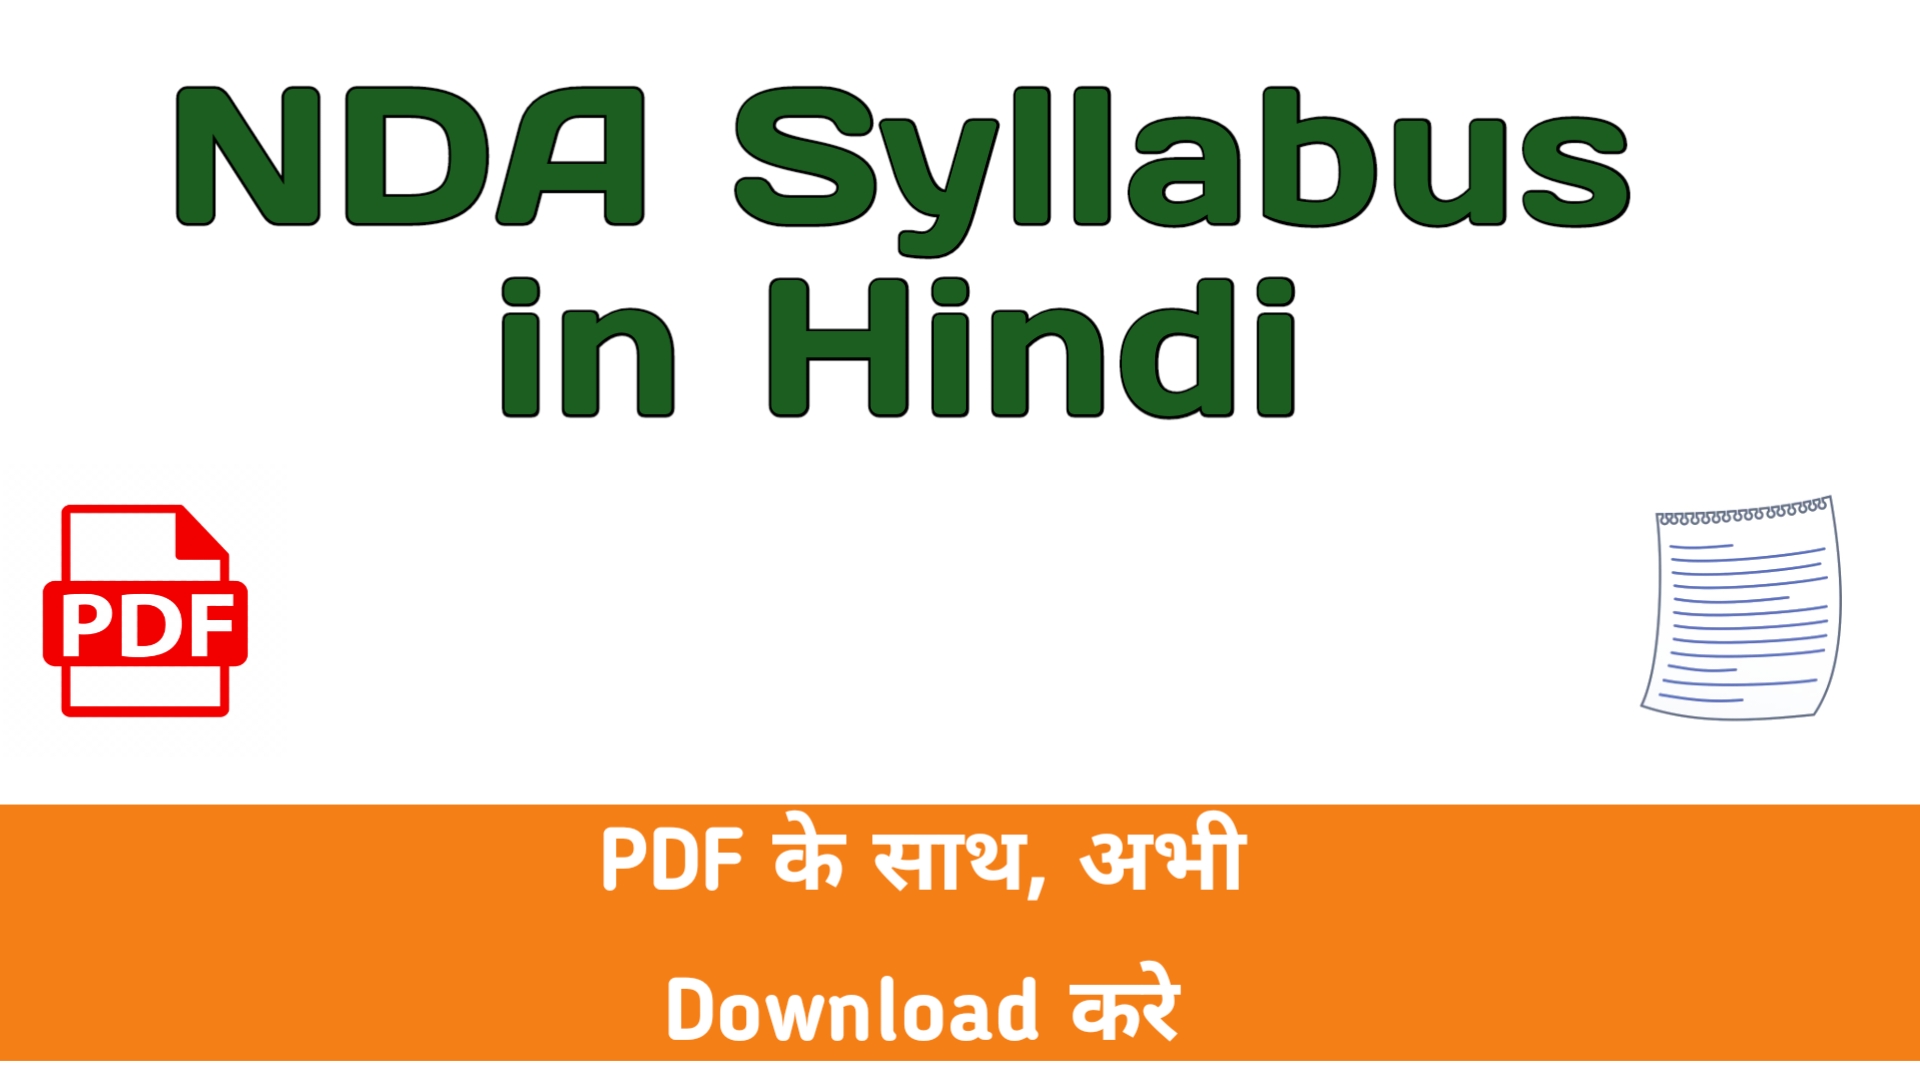 NDA Syllabus in Hindi